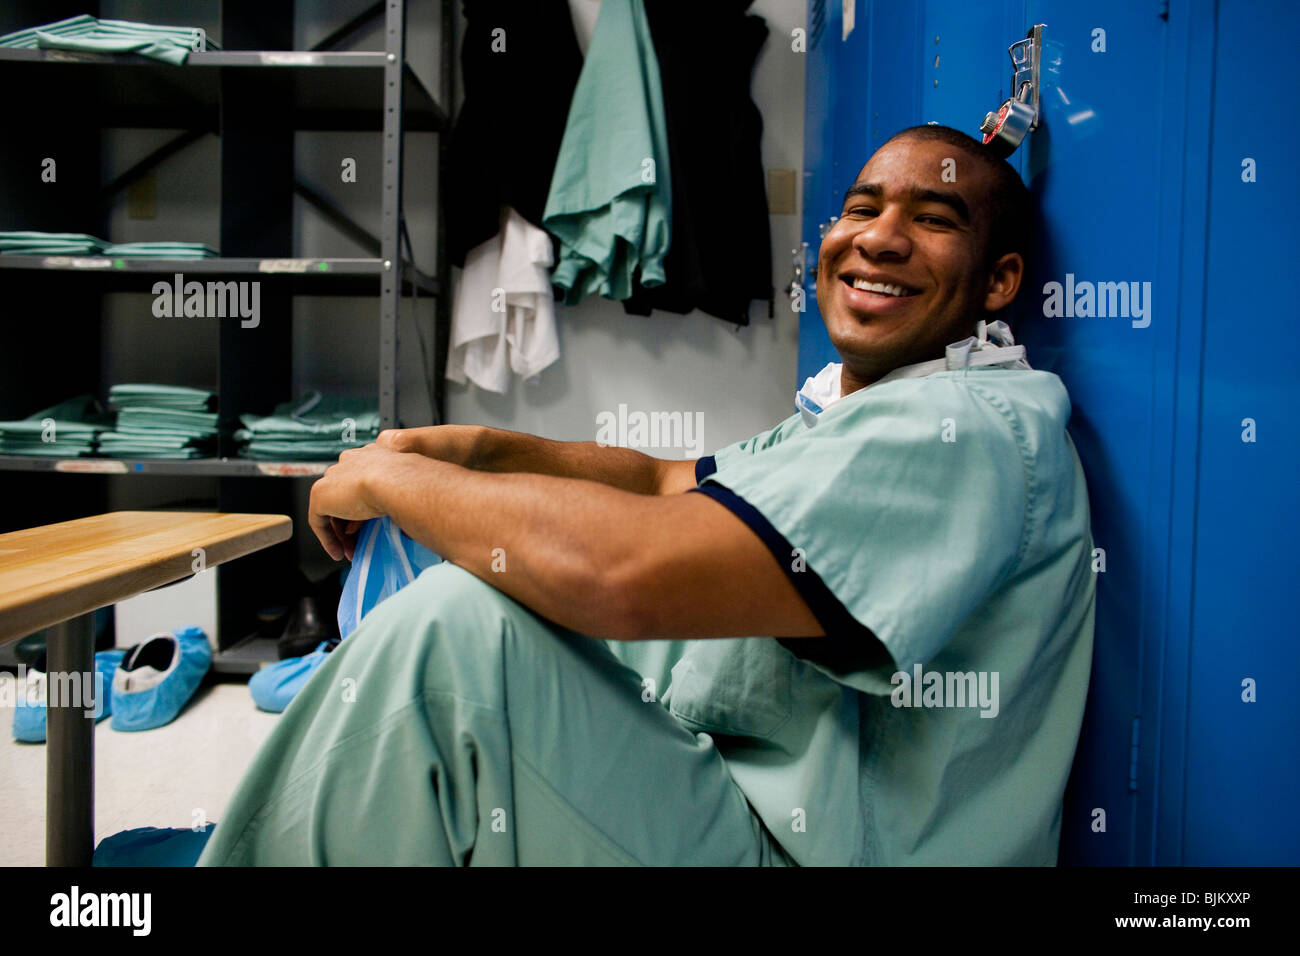 Male doctor in scrubs sitting in locker room Stock Photo